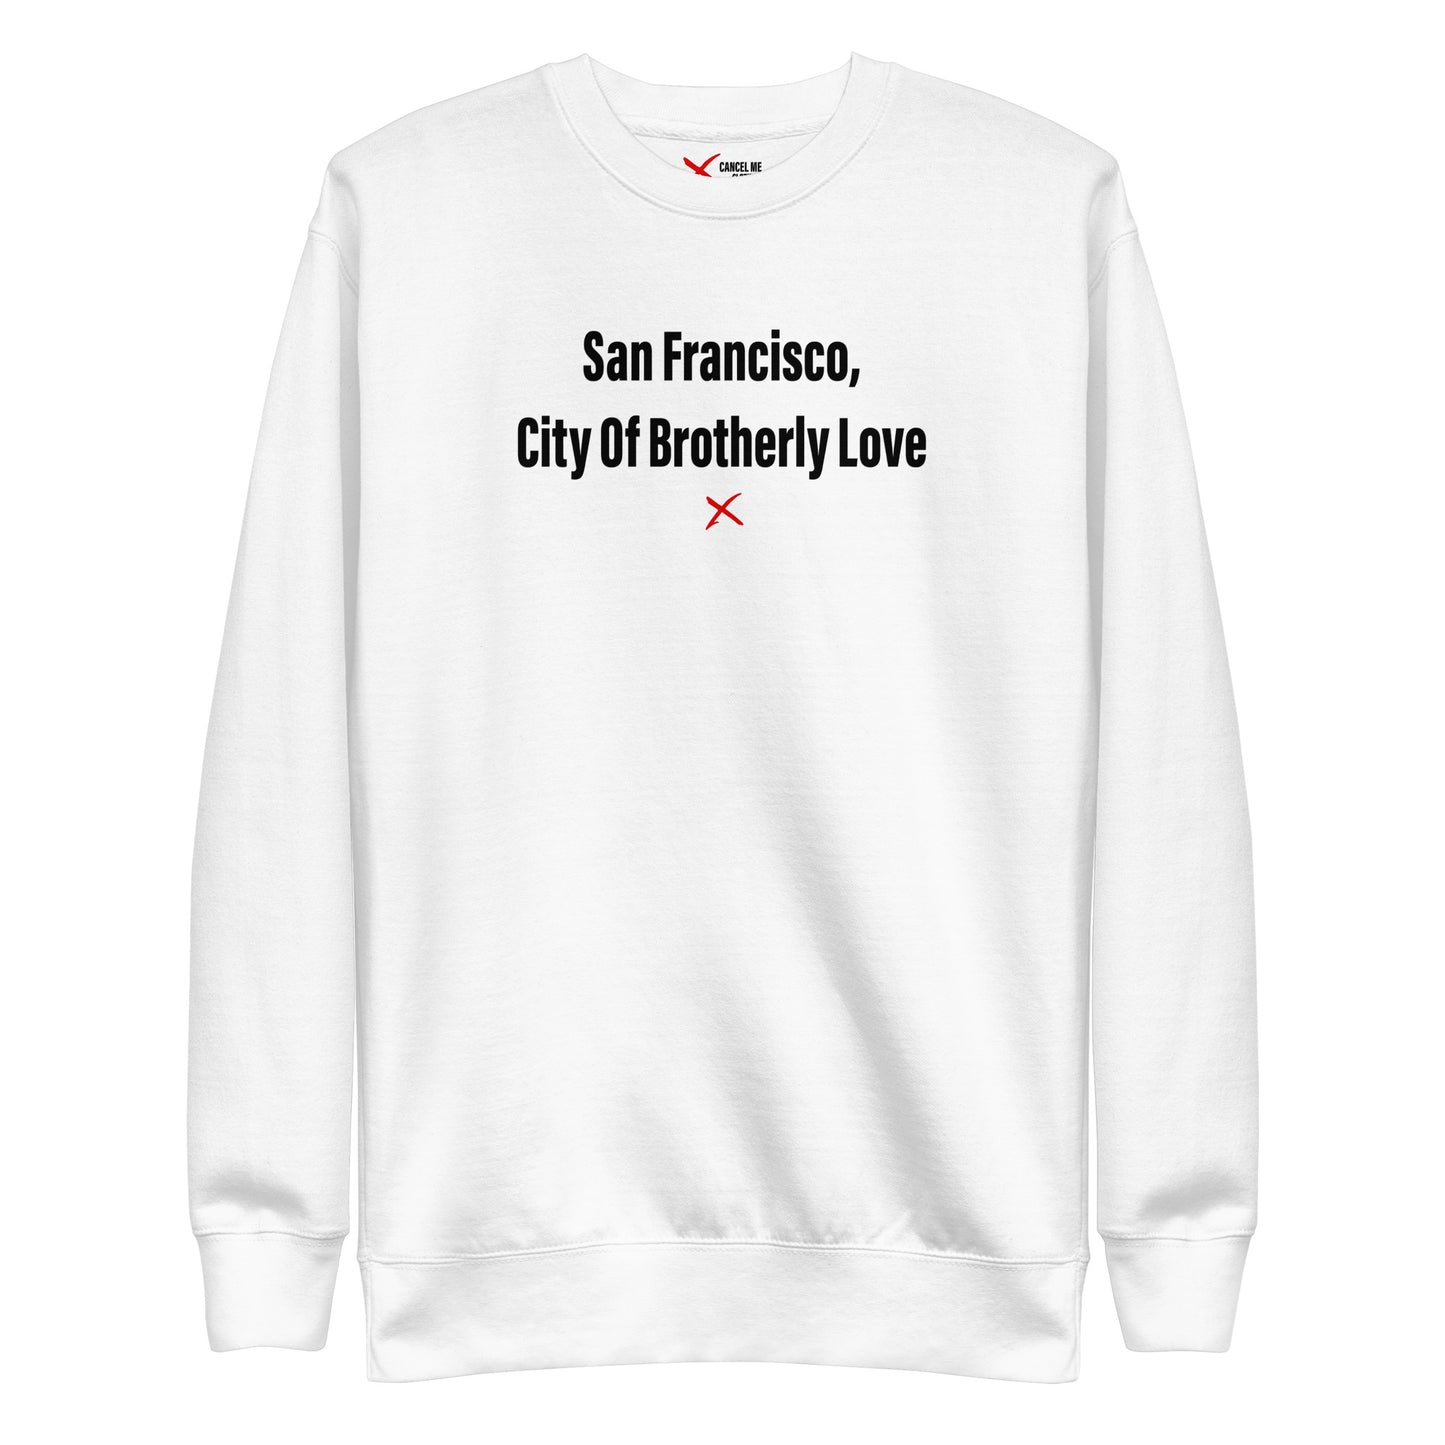 San Francisco, City Of Brotherly Love - Sweatshirt